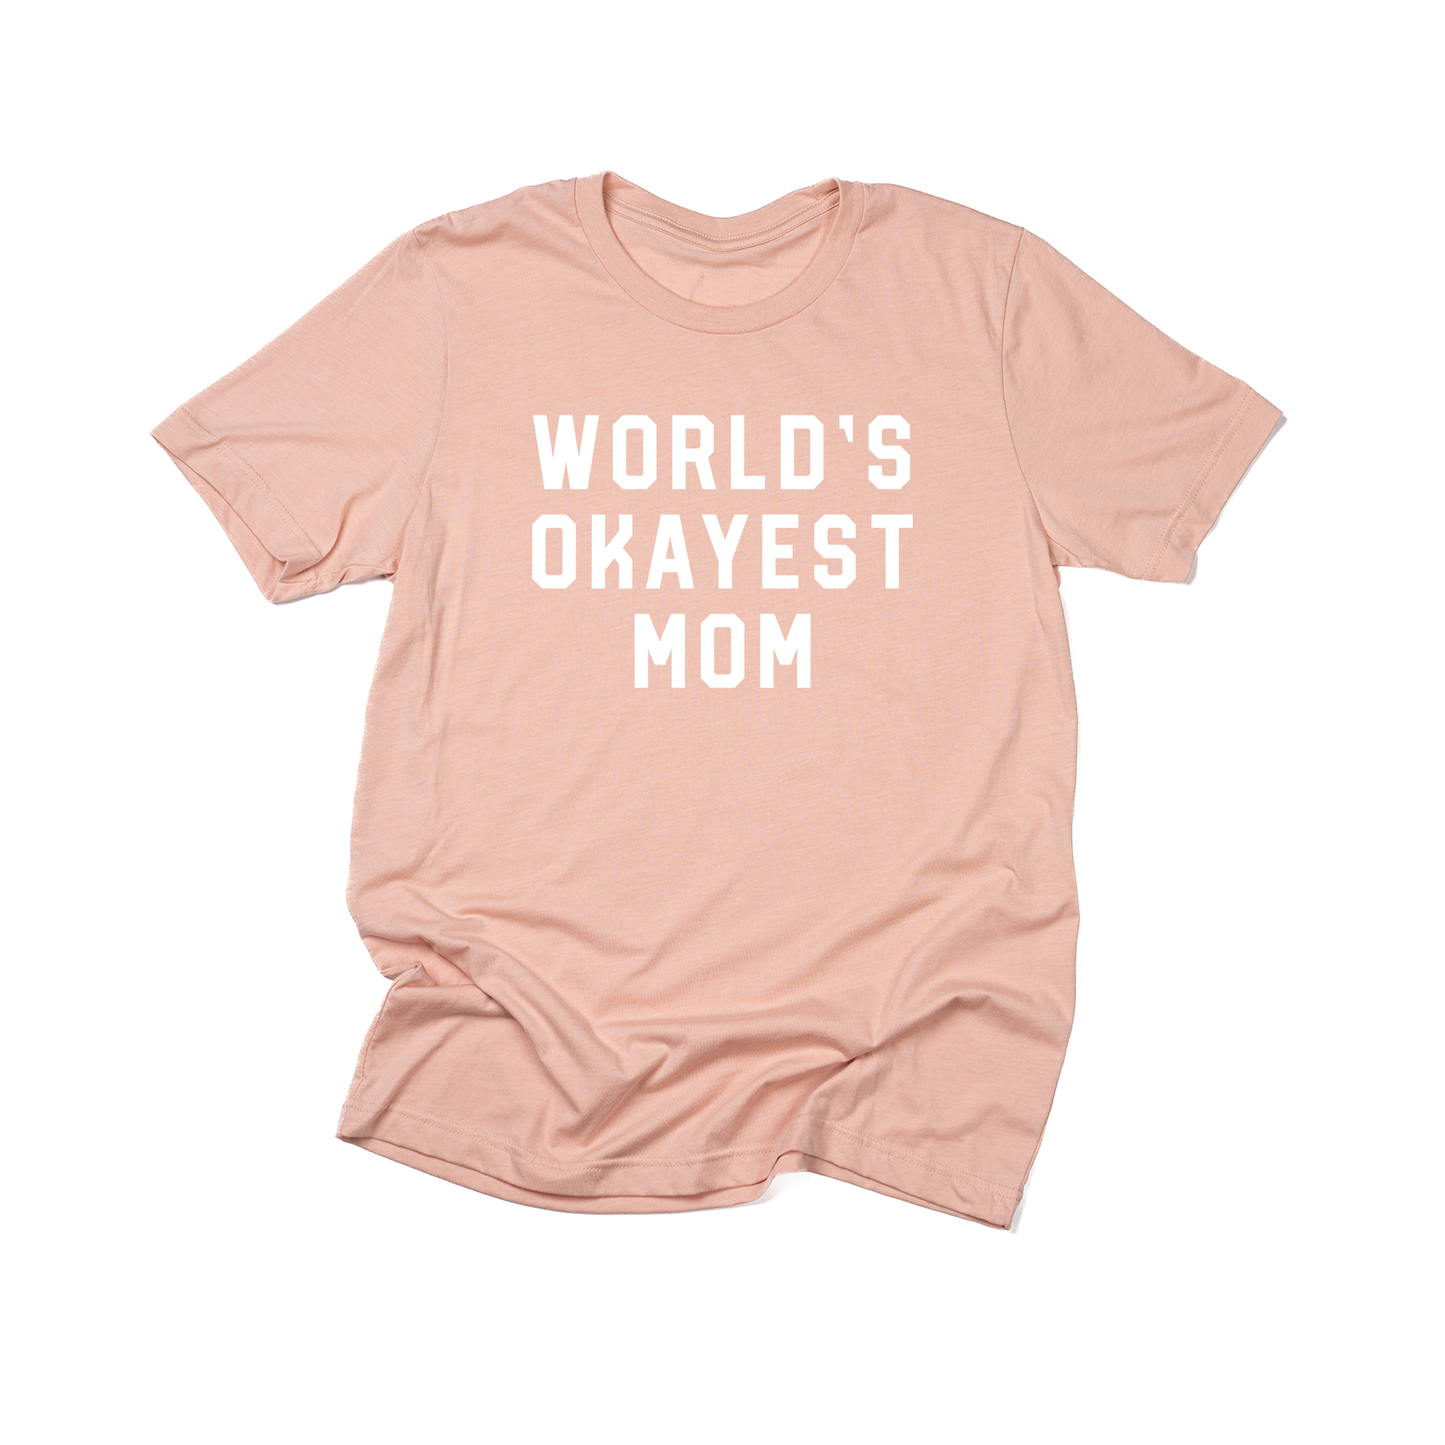 Worlds Okayest Mom (White) - Tee (Peach)